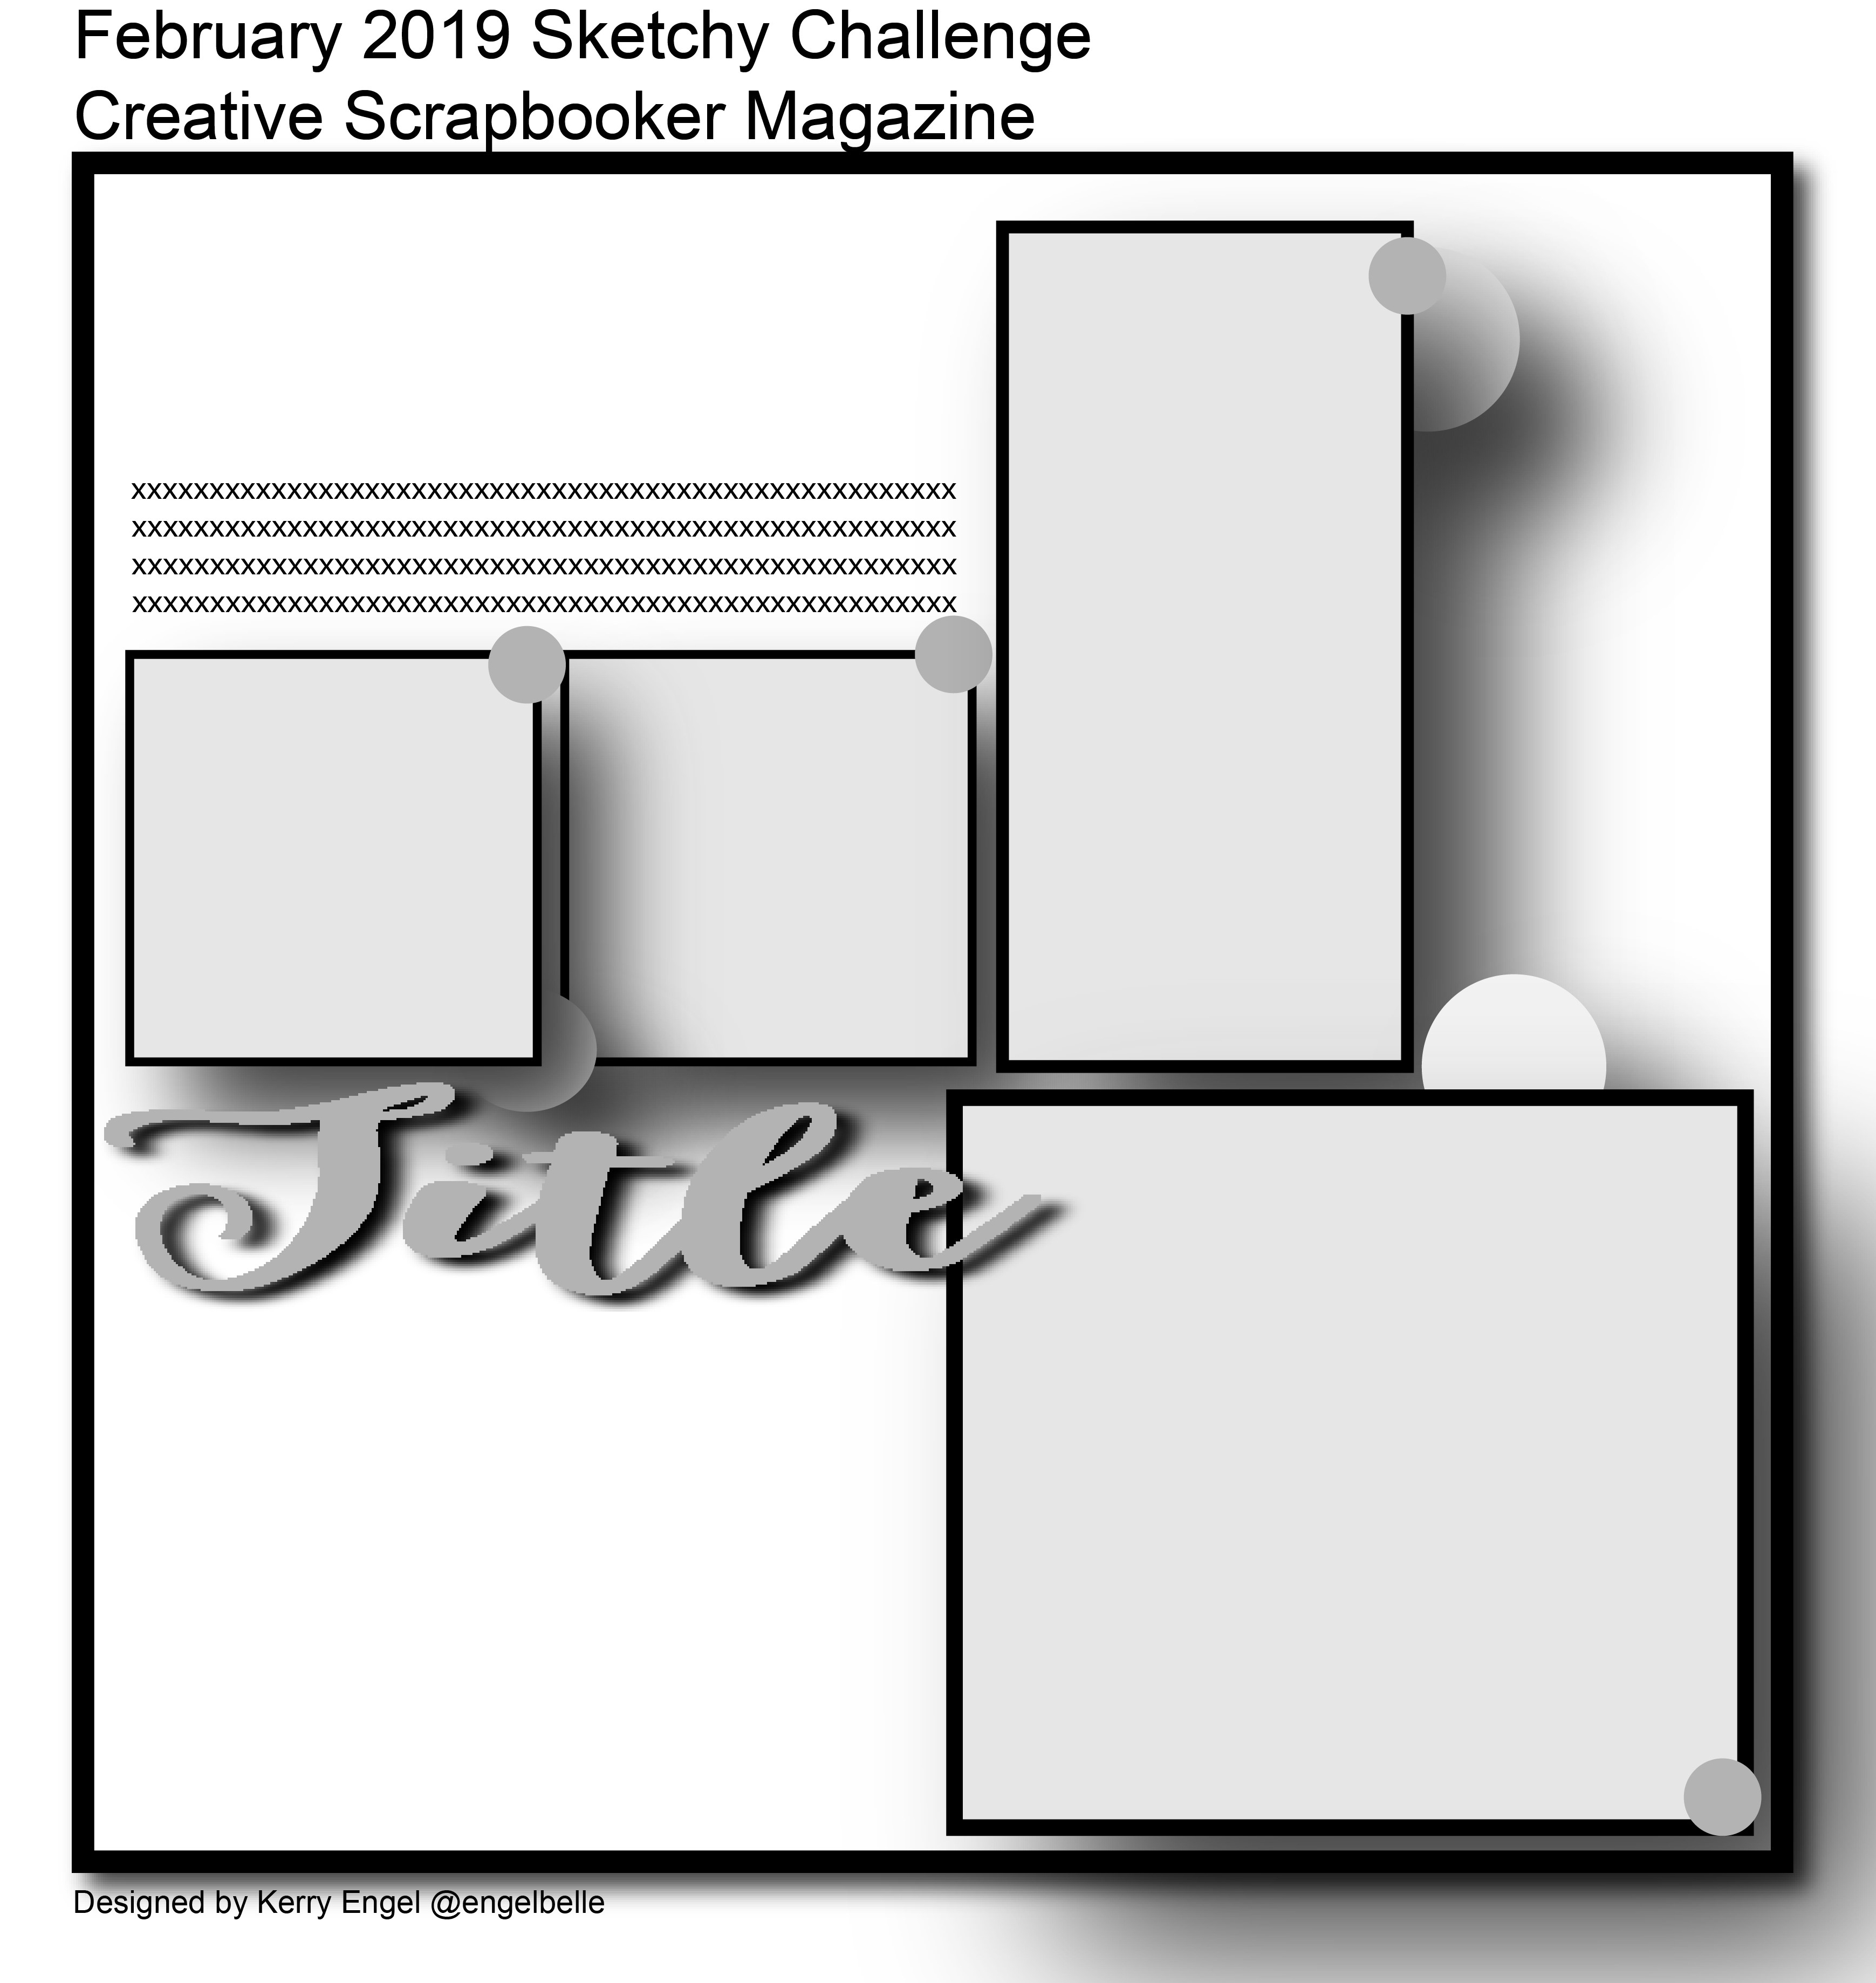 12 X 12 Scrapbook Sketch designed by Kerry Engel | Creative Scrapbooker Magazine